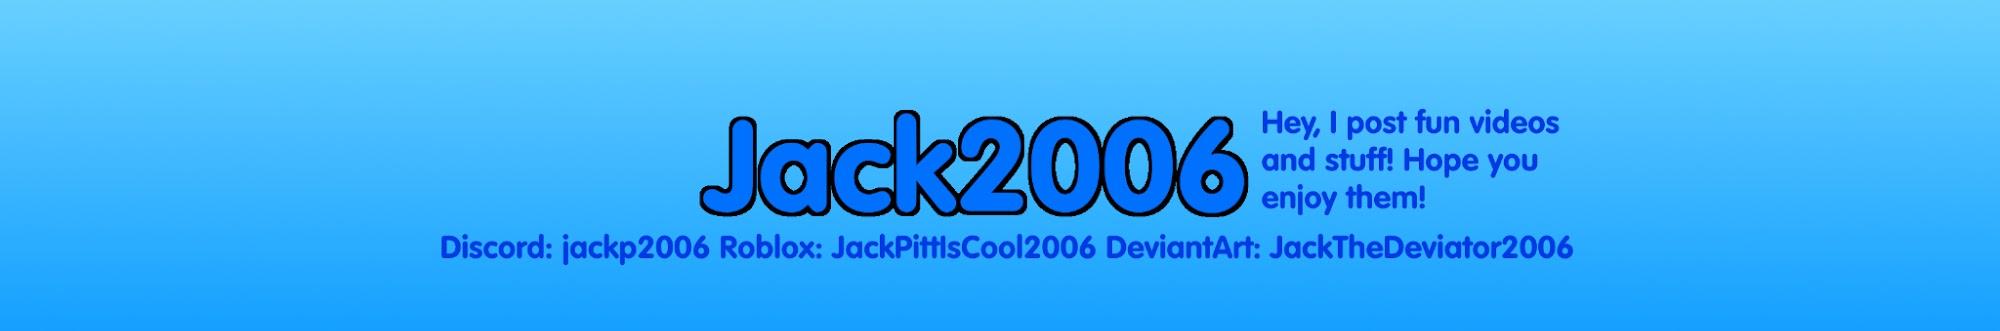 Jack2006